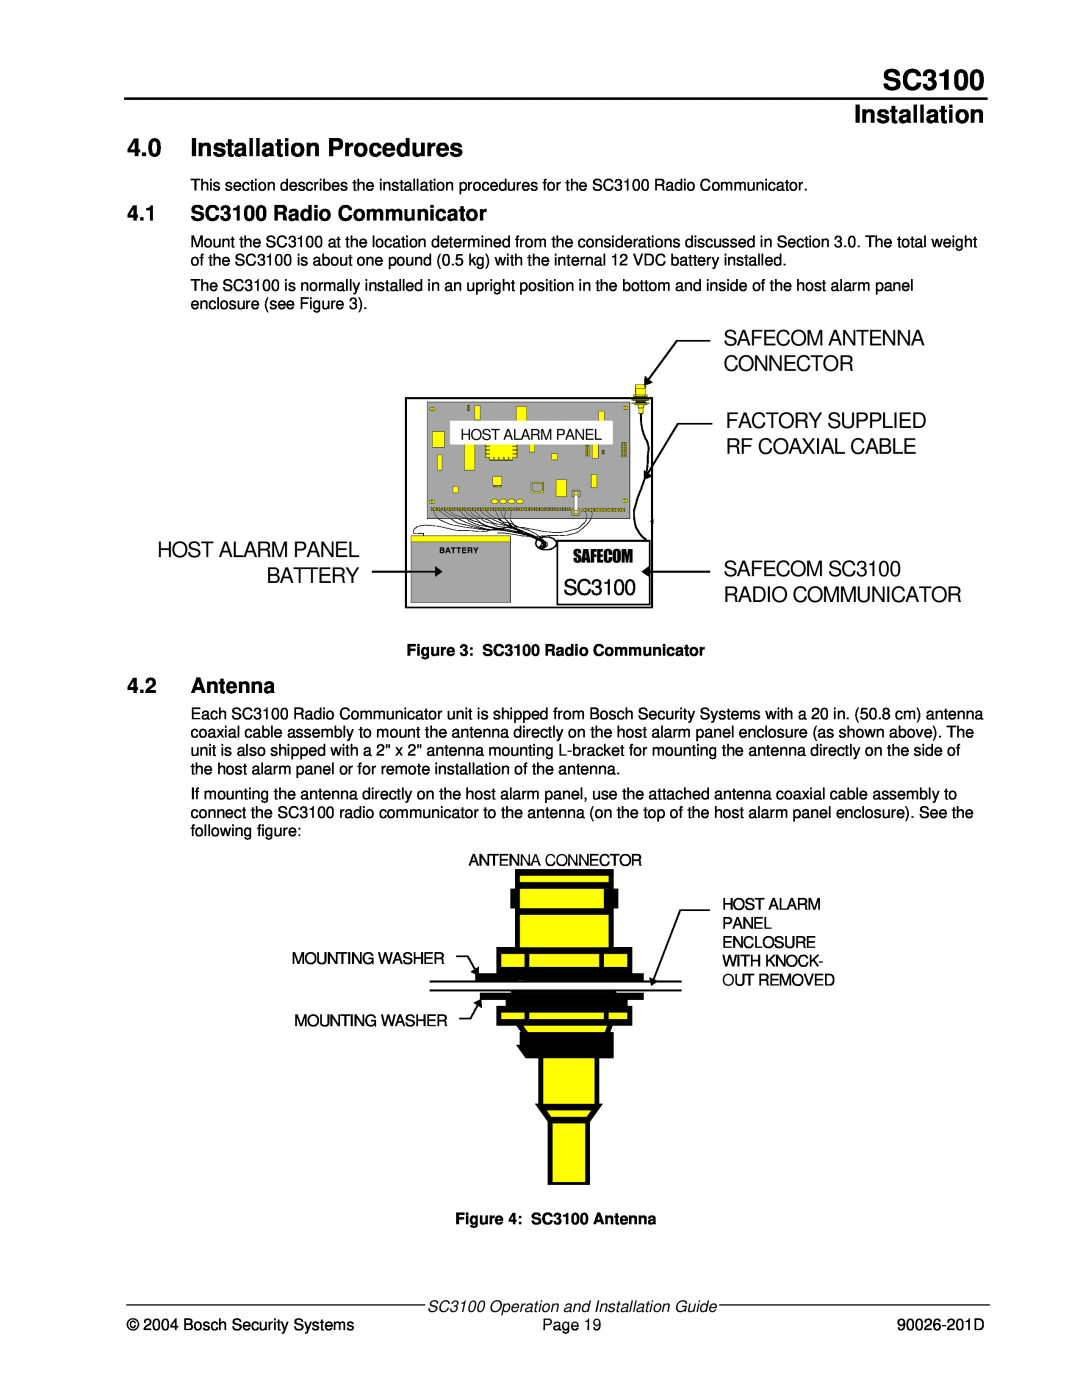 Bosch Appliances Installation 4.0Installation Procedures, 4.1SC3100 Radio Communicator, 4.2Antenna, SC3100 Antenna 